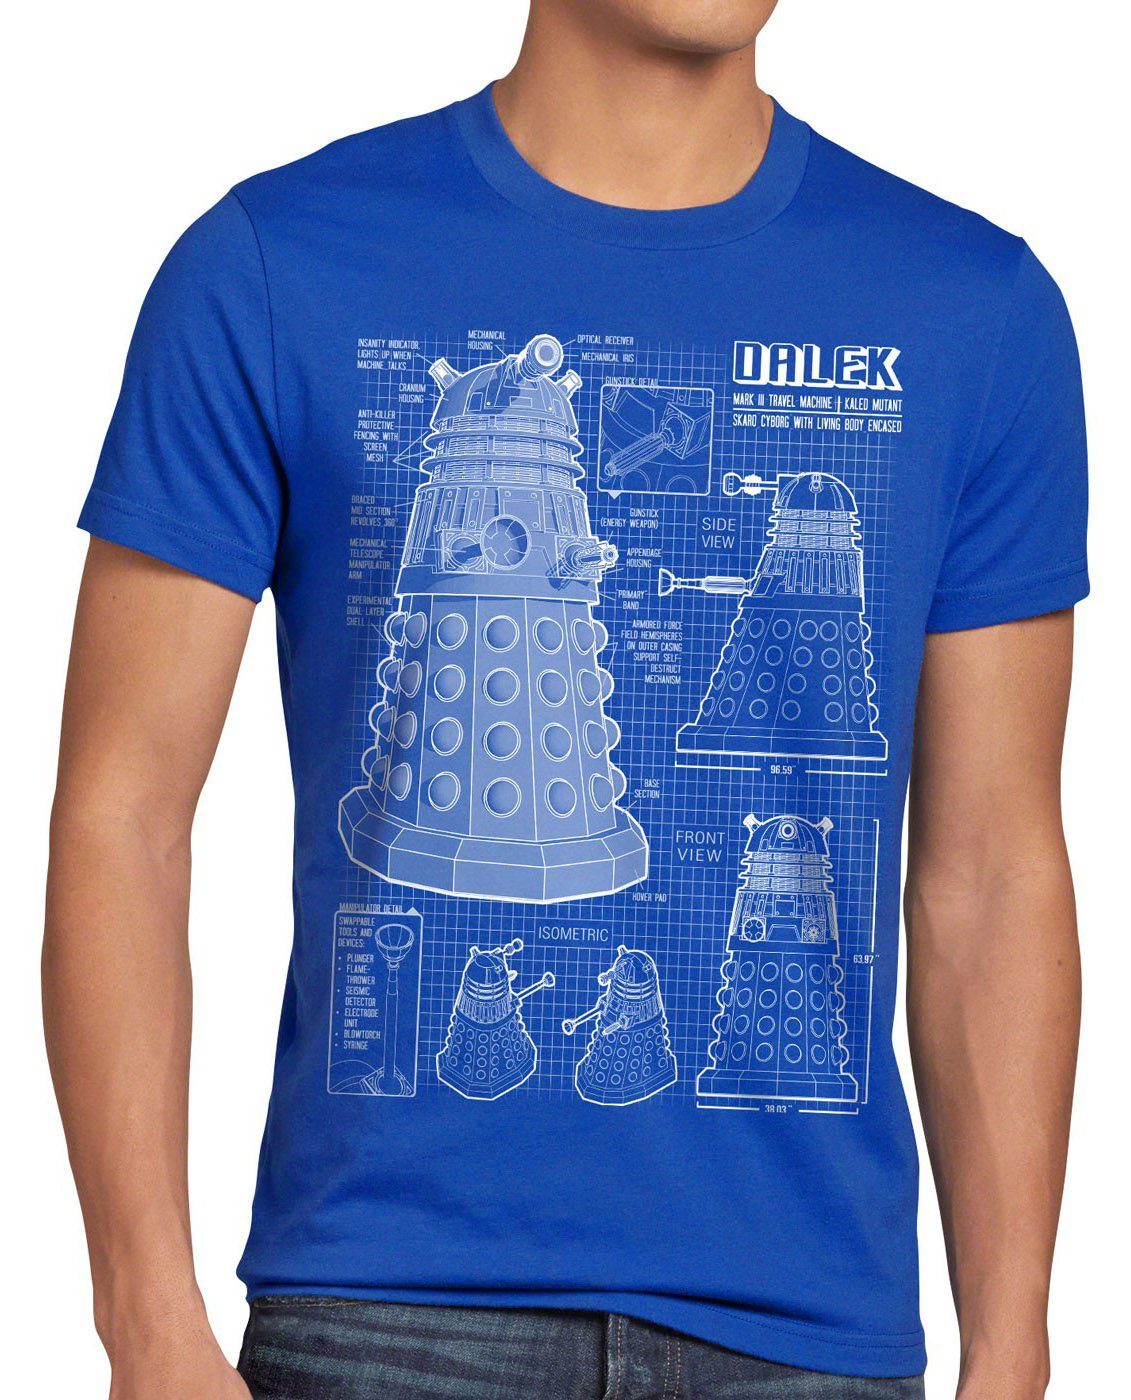 style3 Print-Shirt Herren T-Shirt Dalek who time police doctor box space dr tv zeitreise doktor amy blau